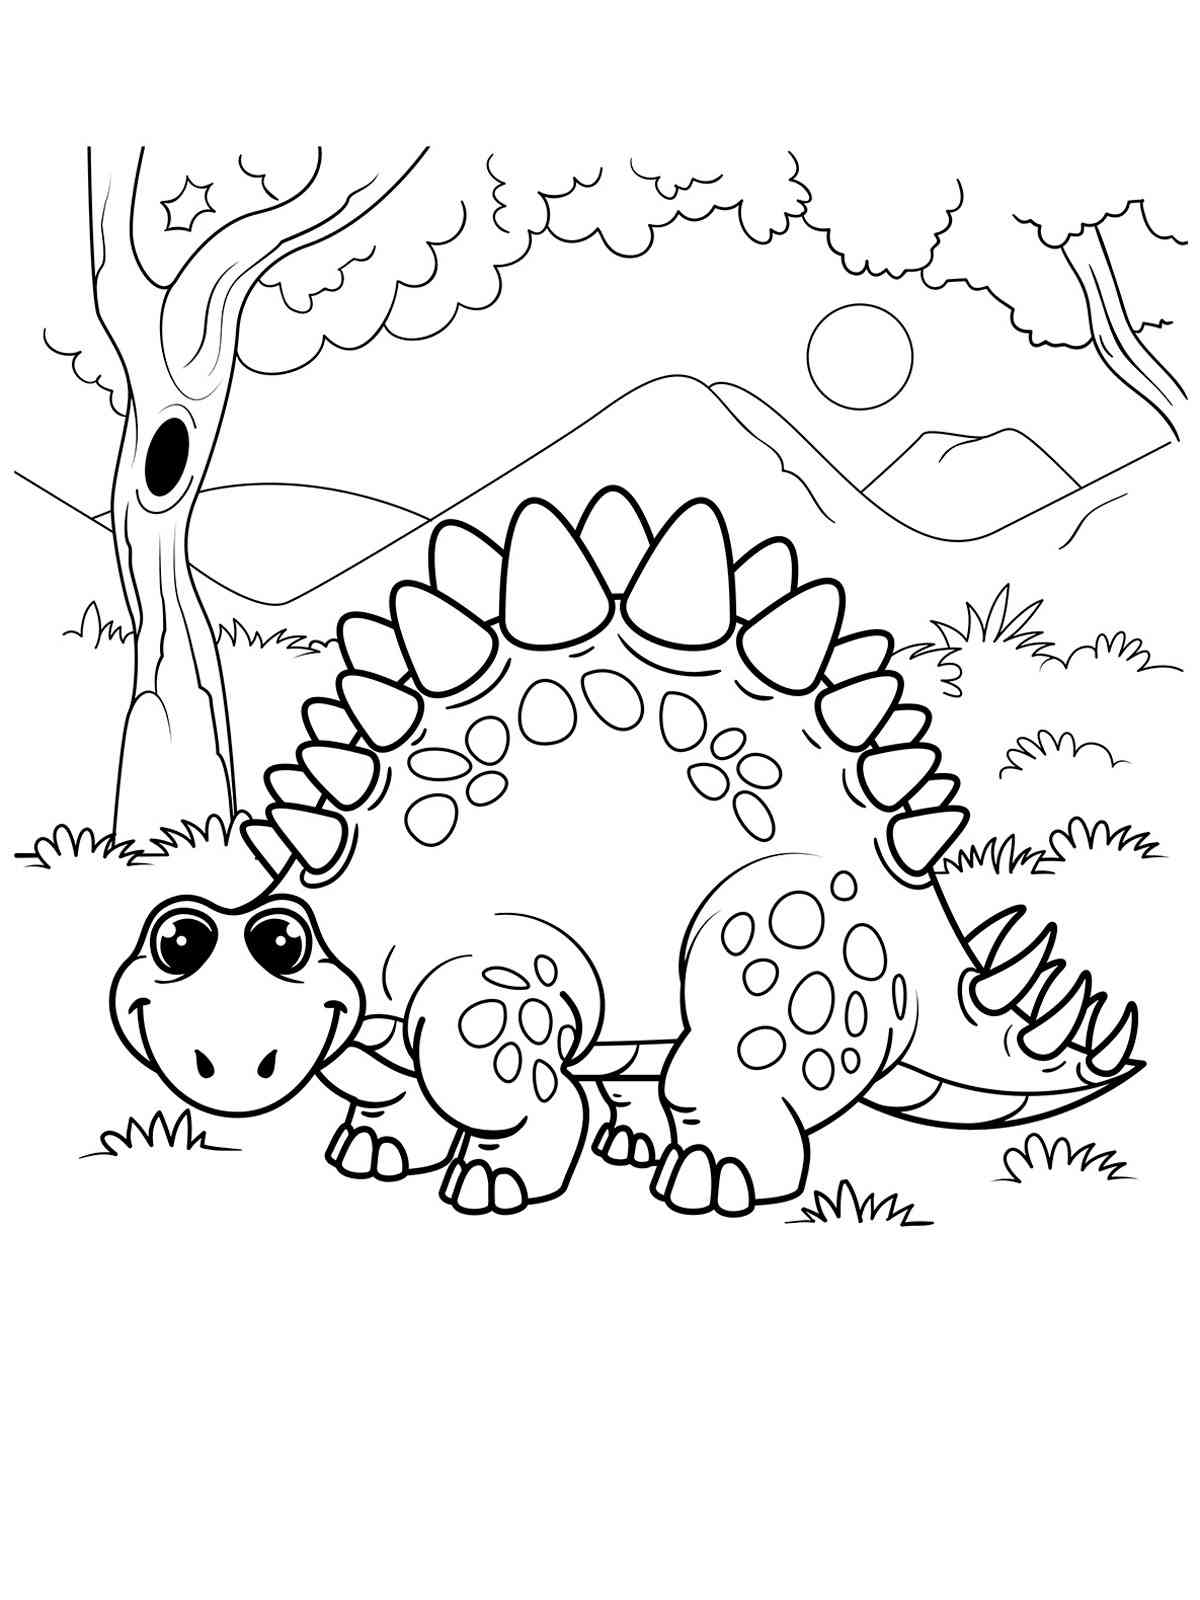 Simple Little Stegosaurus coloring page